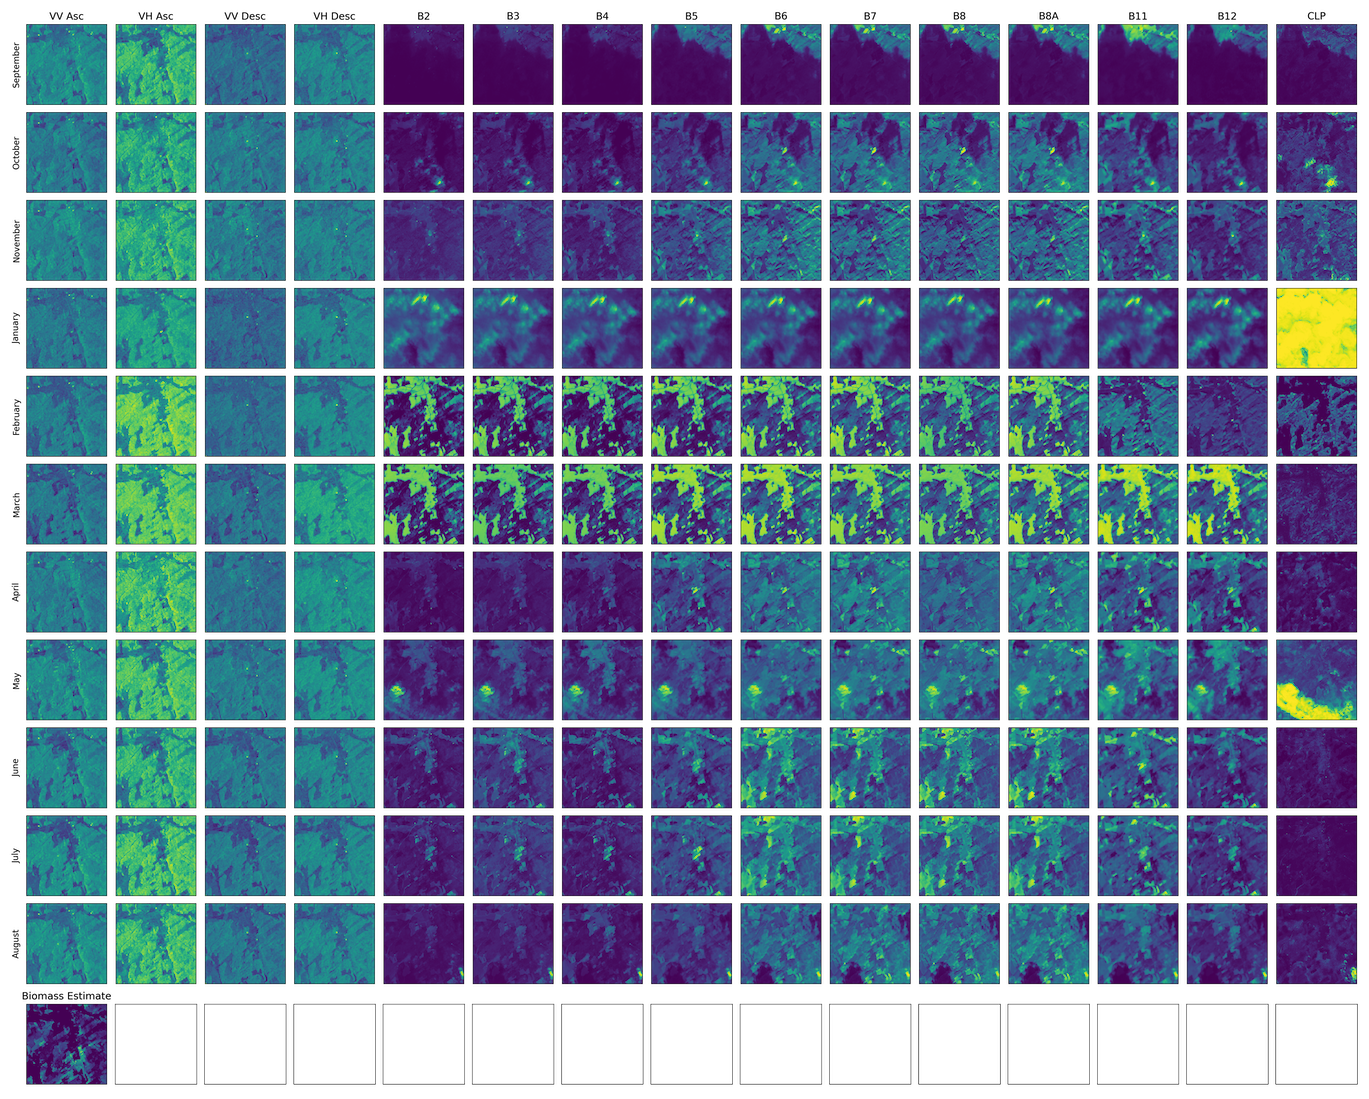 Visualization of a single chip